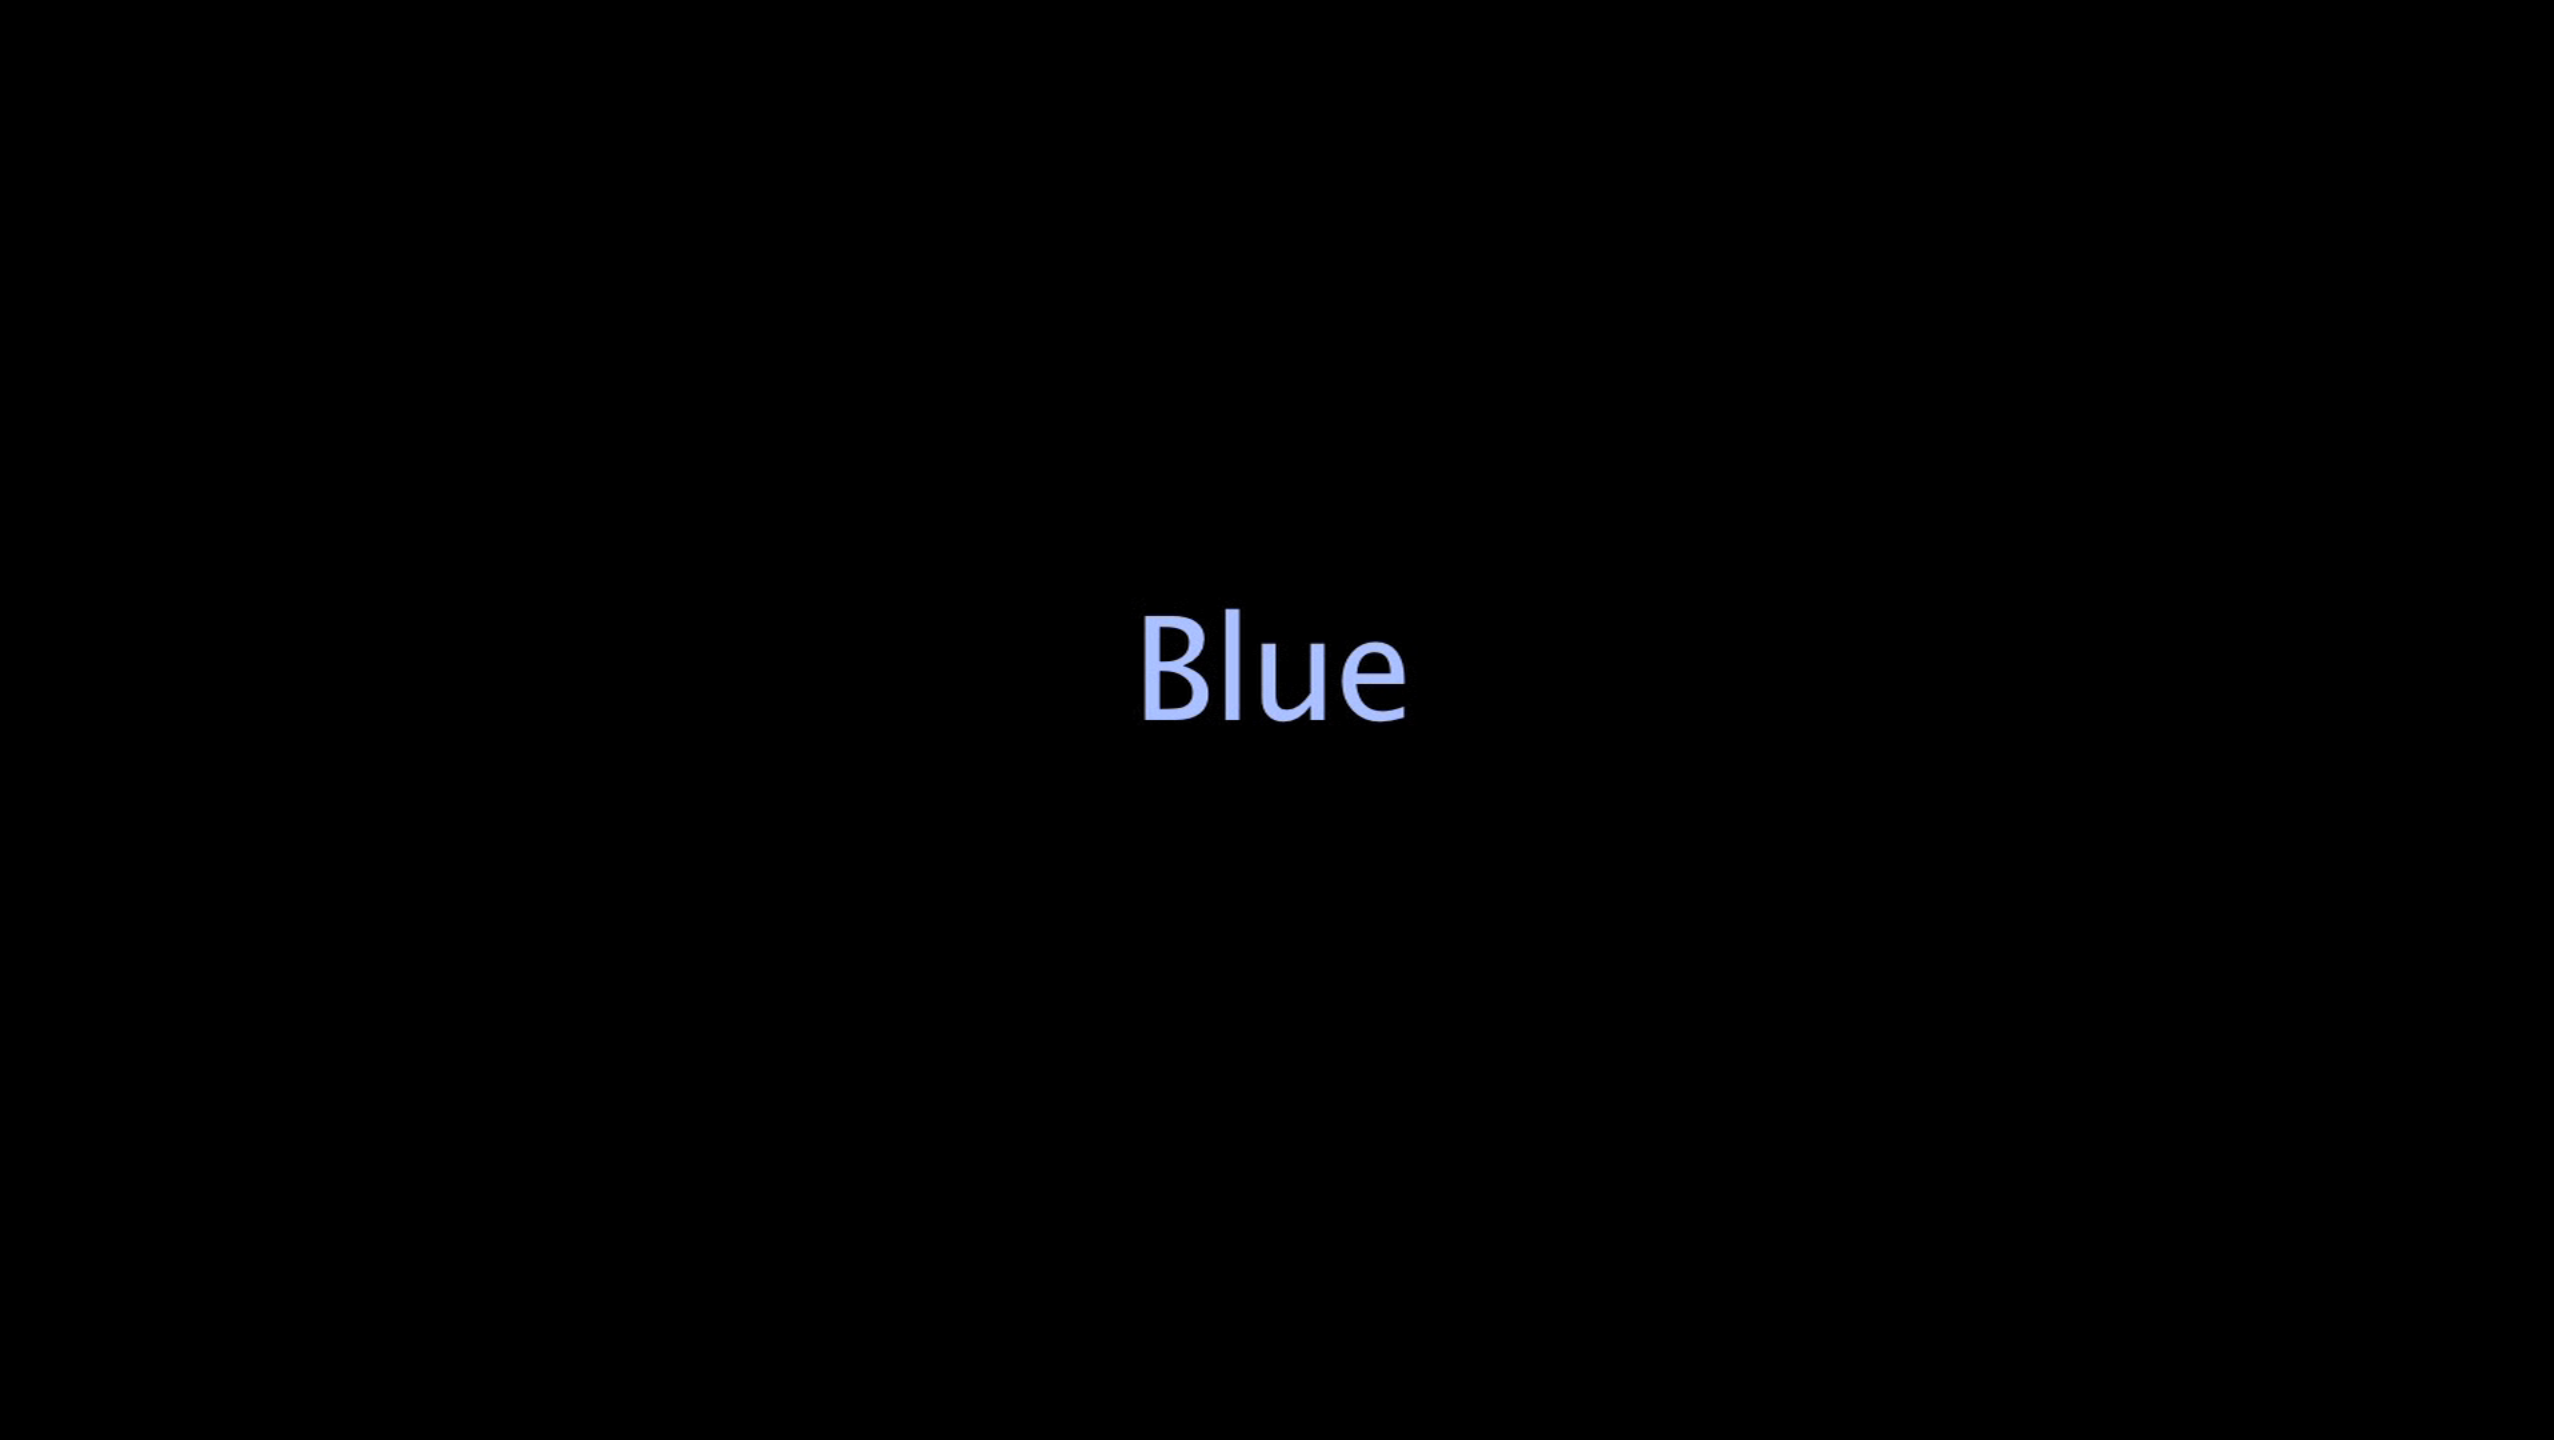 Blueberry (Blue)